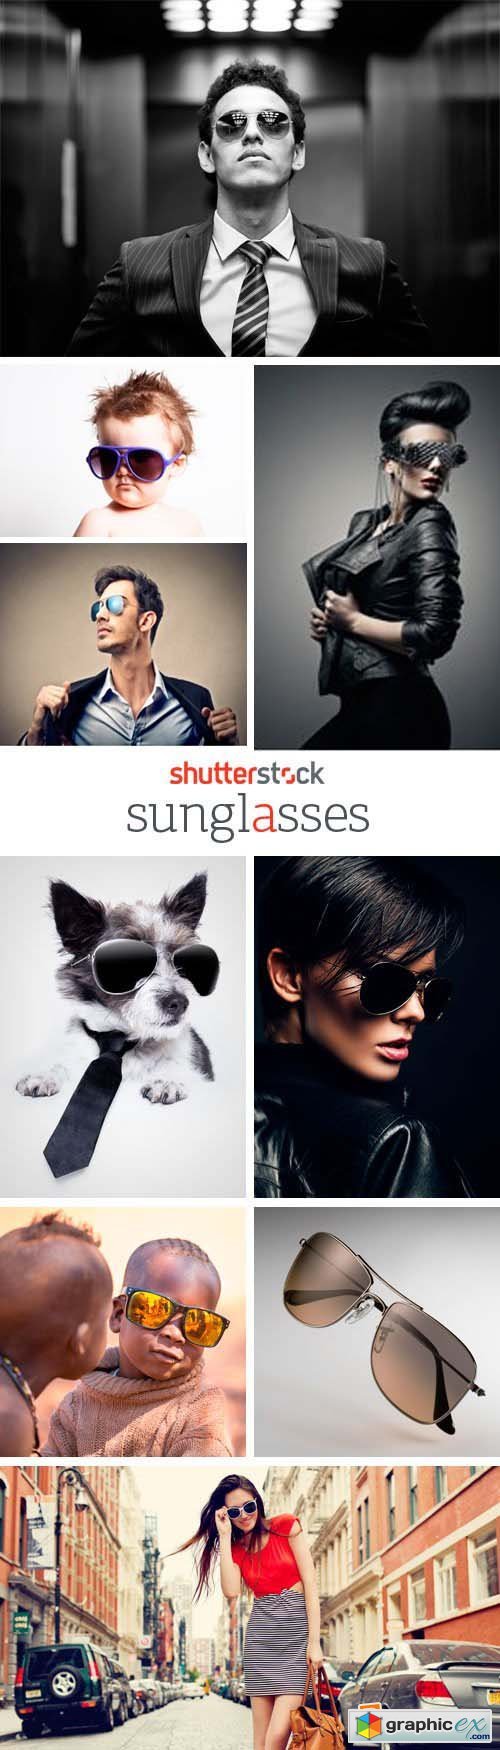 Amazing SS - Sunglasses, 25xJPGs